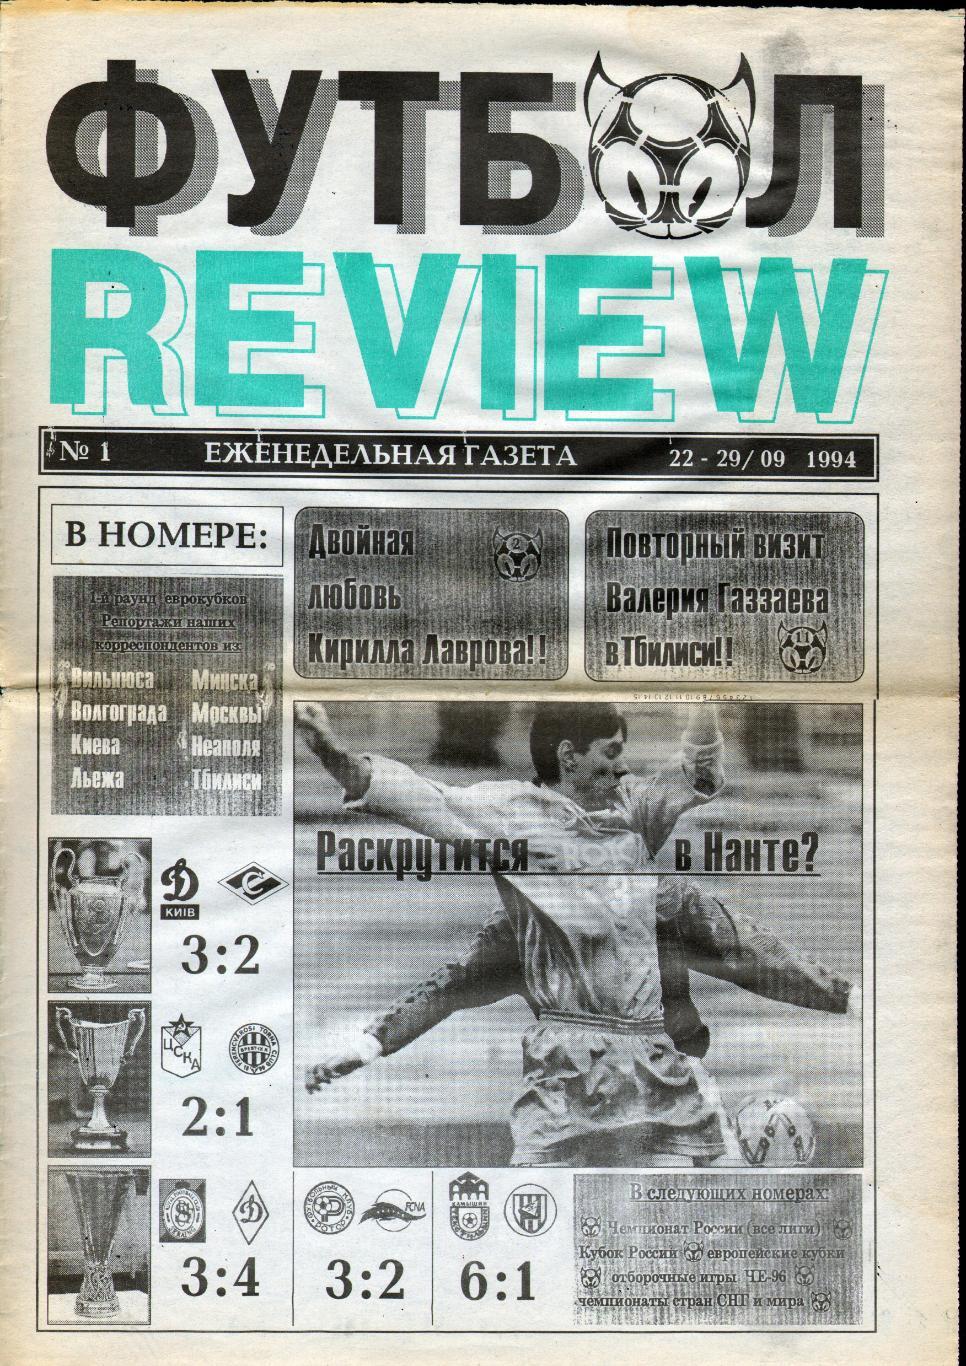 Еженедельник Футбол-Review - 1994 год